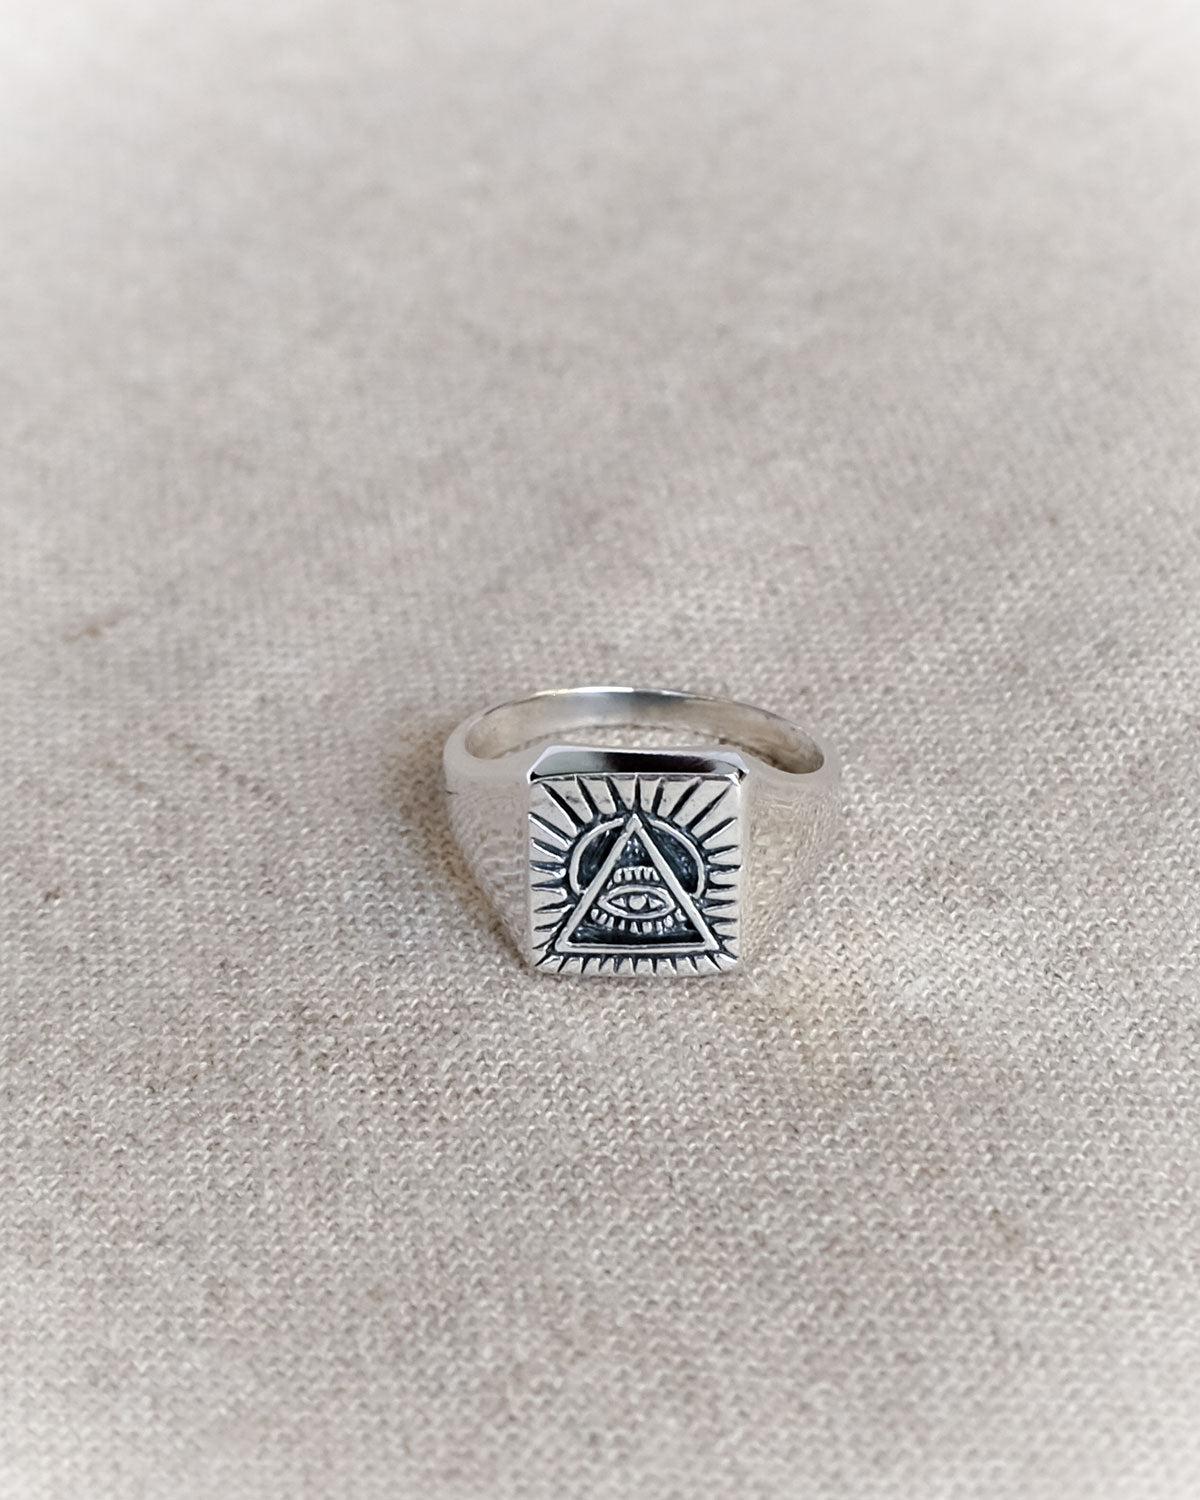 Illuminati Ring in Silver